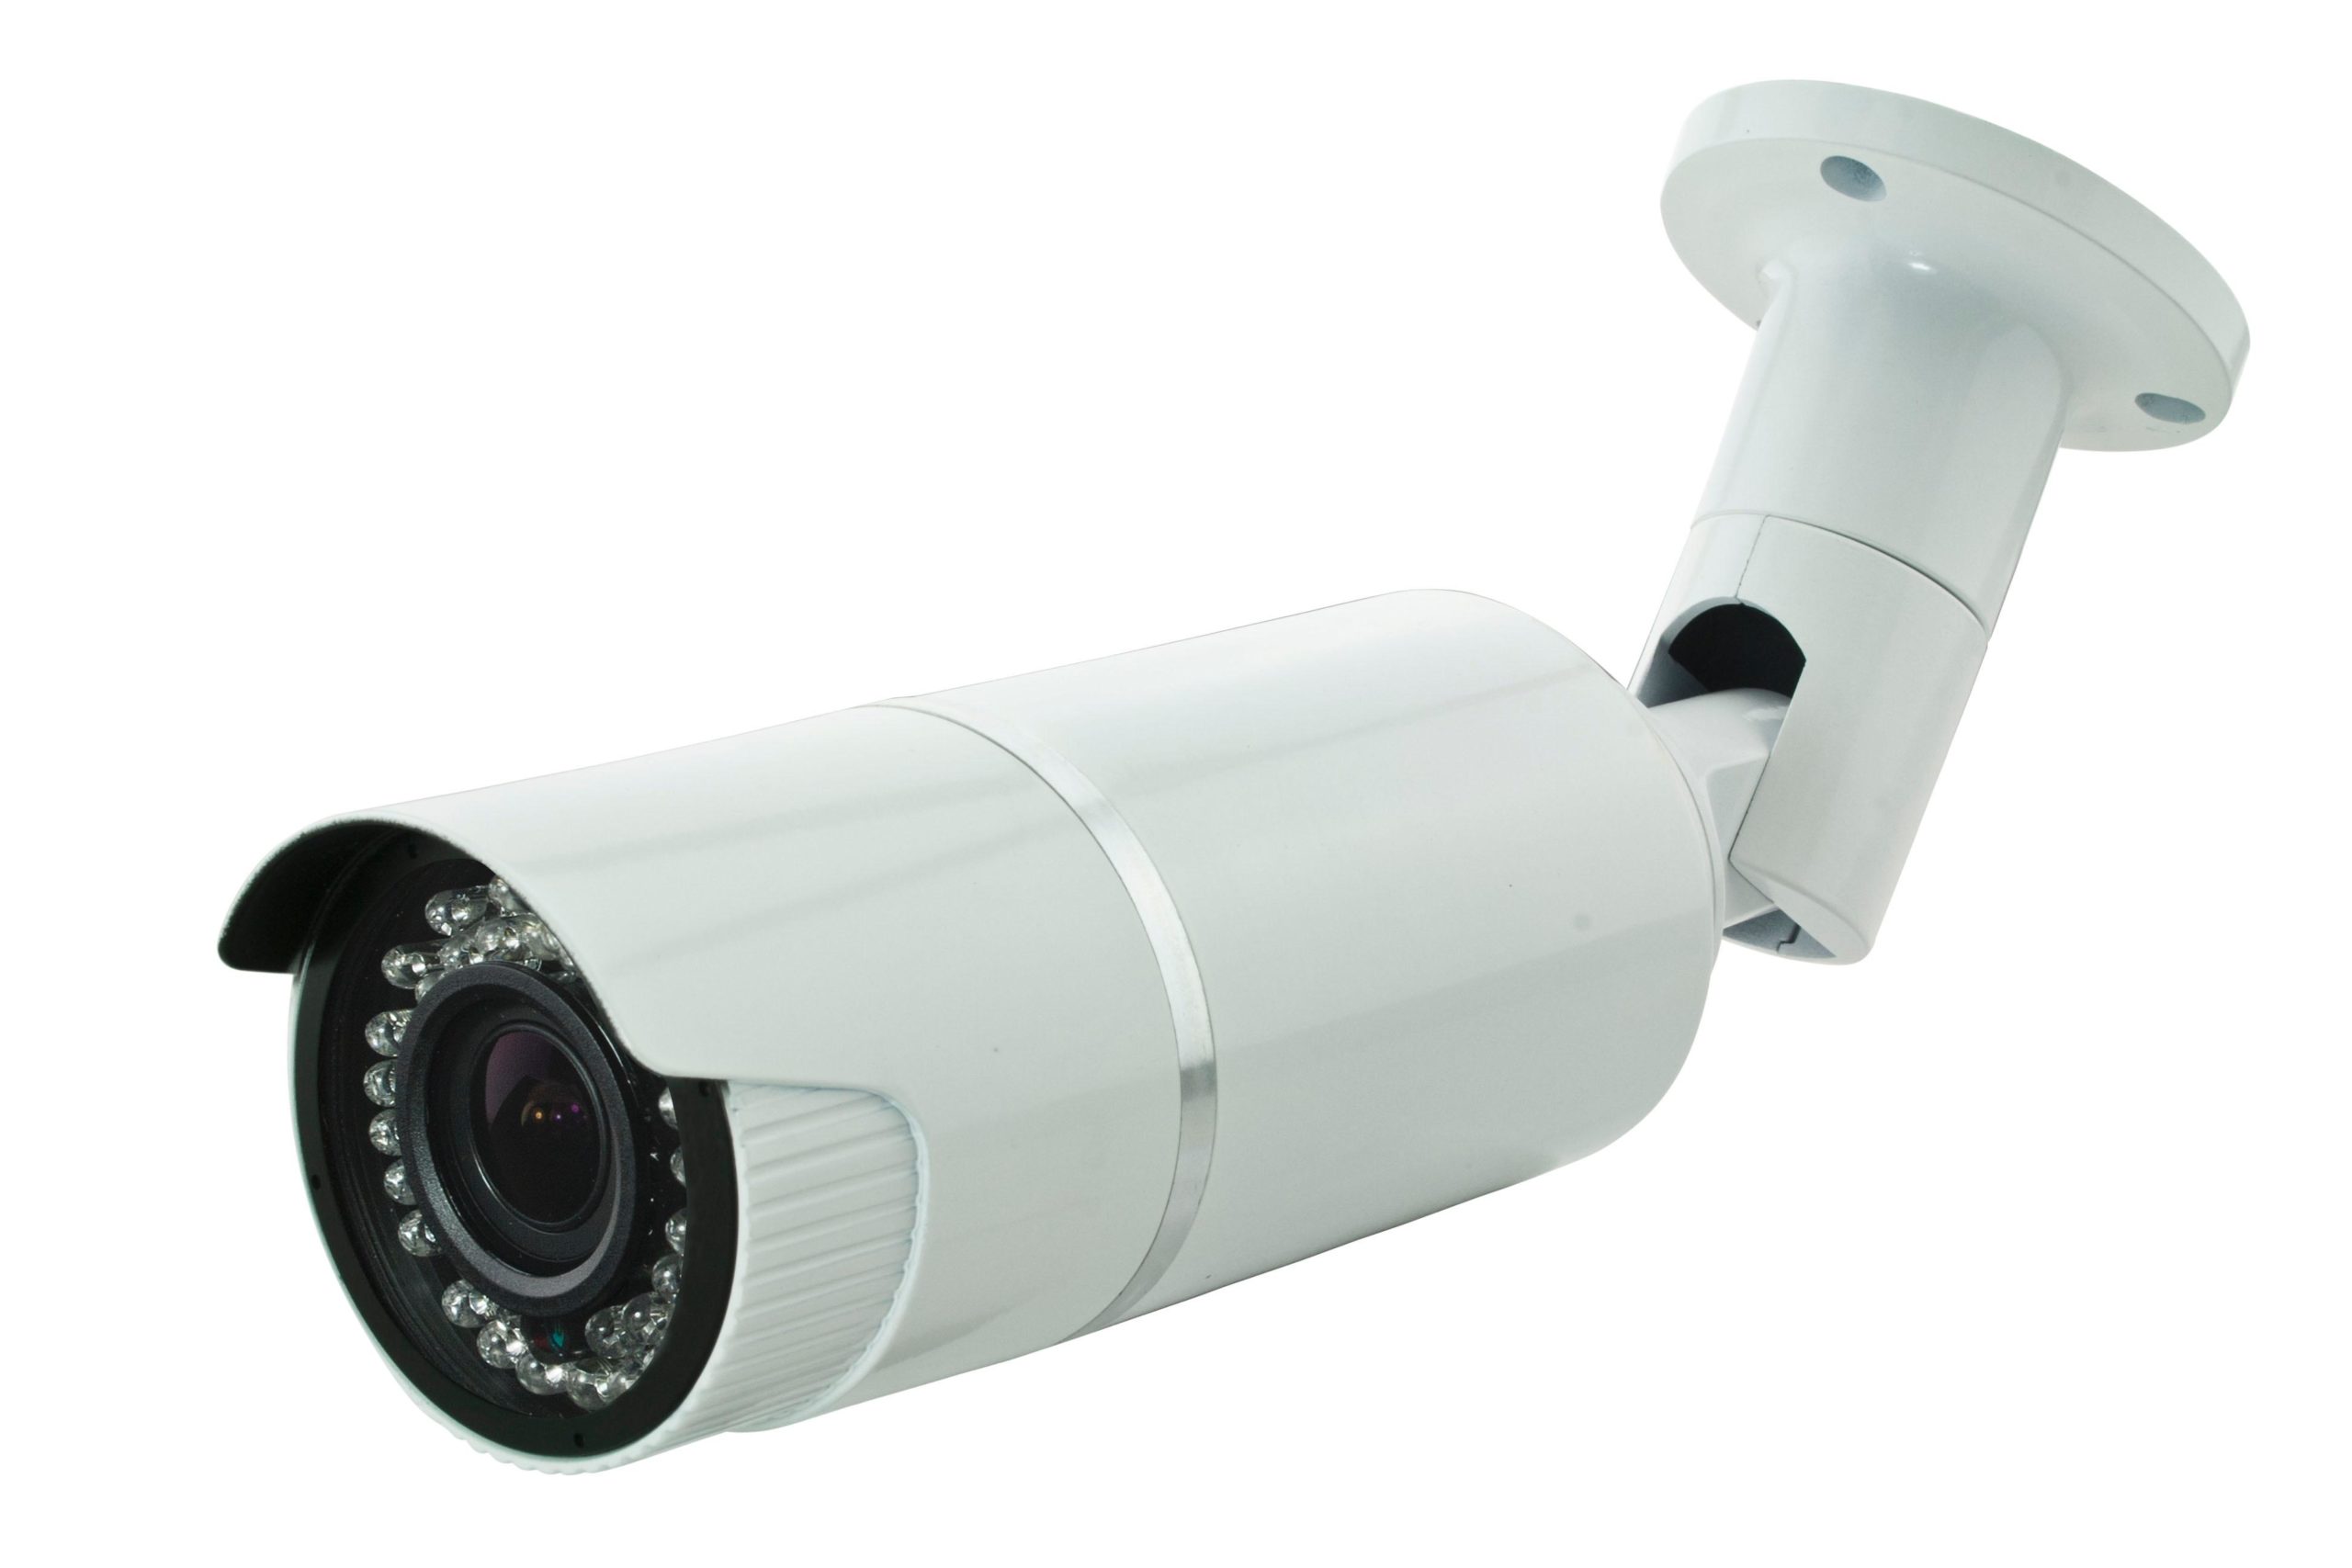 Видеокамера наблюдения. IP камера Omny Base vibe4-WDU. Tantos TSC-pl960pahdv (2.8-12). IP камера наружного наблюдения Варио.4мп. 2,8-12мм. Видеокамера IP b1710rv, 1/3 Sony Exmor, 1.3МП, 2.8-12.0 мм,12 в (DС), POE.